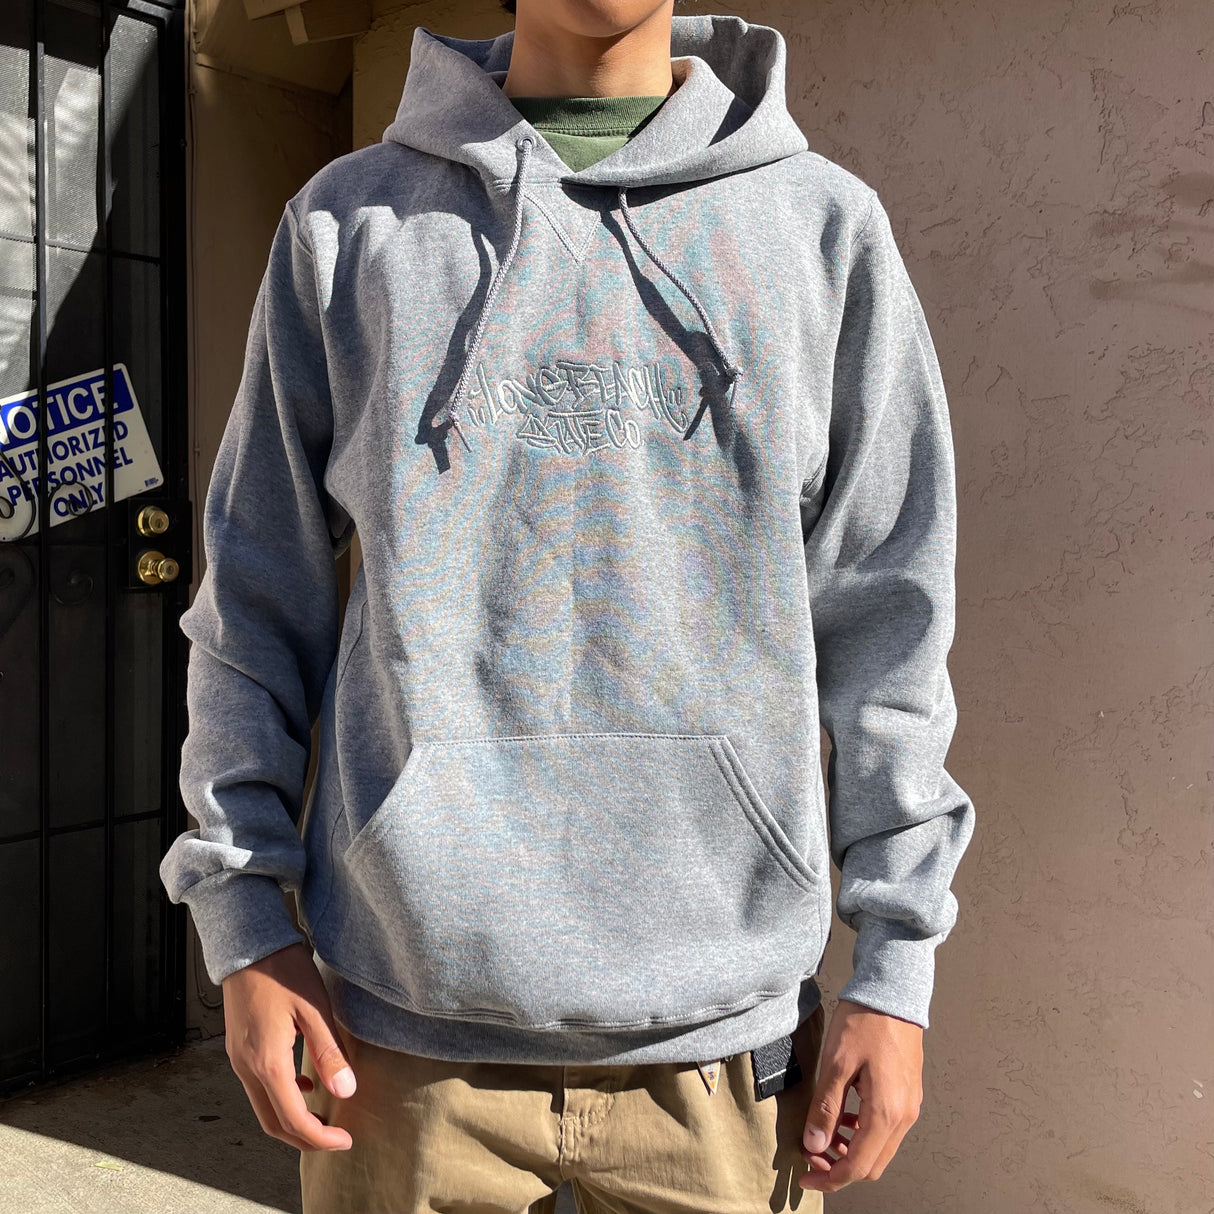 Long Beach Skate Co. Graffiti Signature Oxford Grey Hooded Sweatshirt